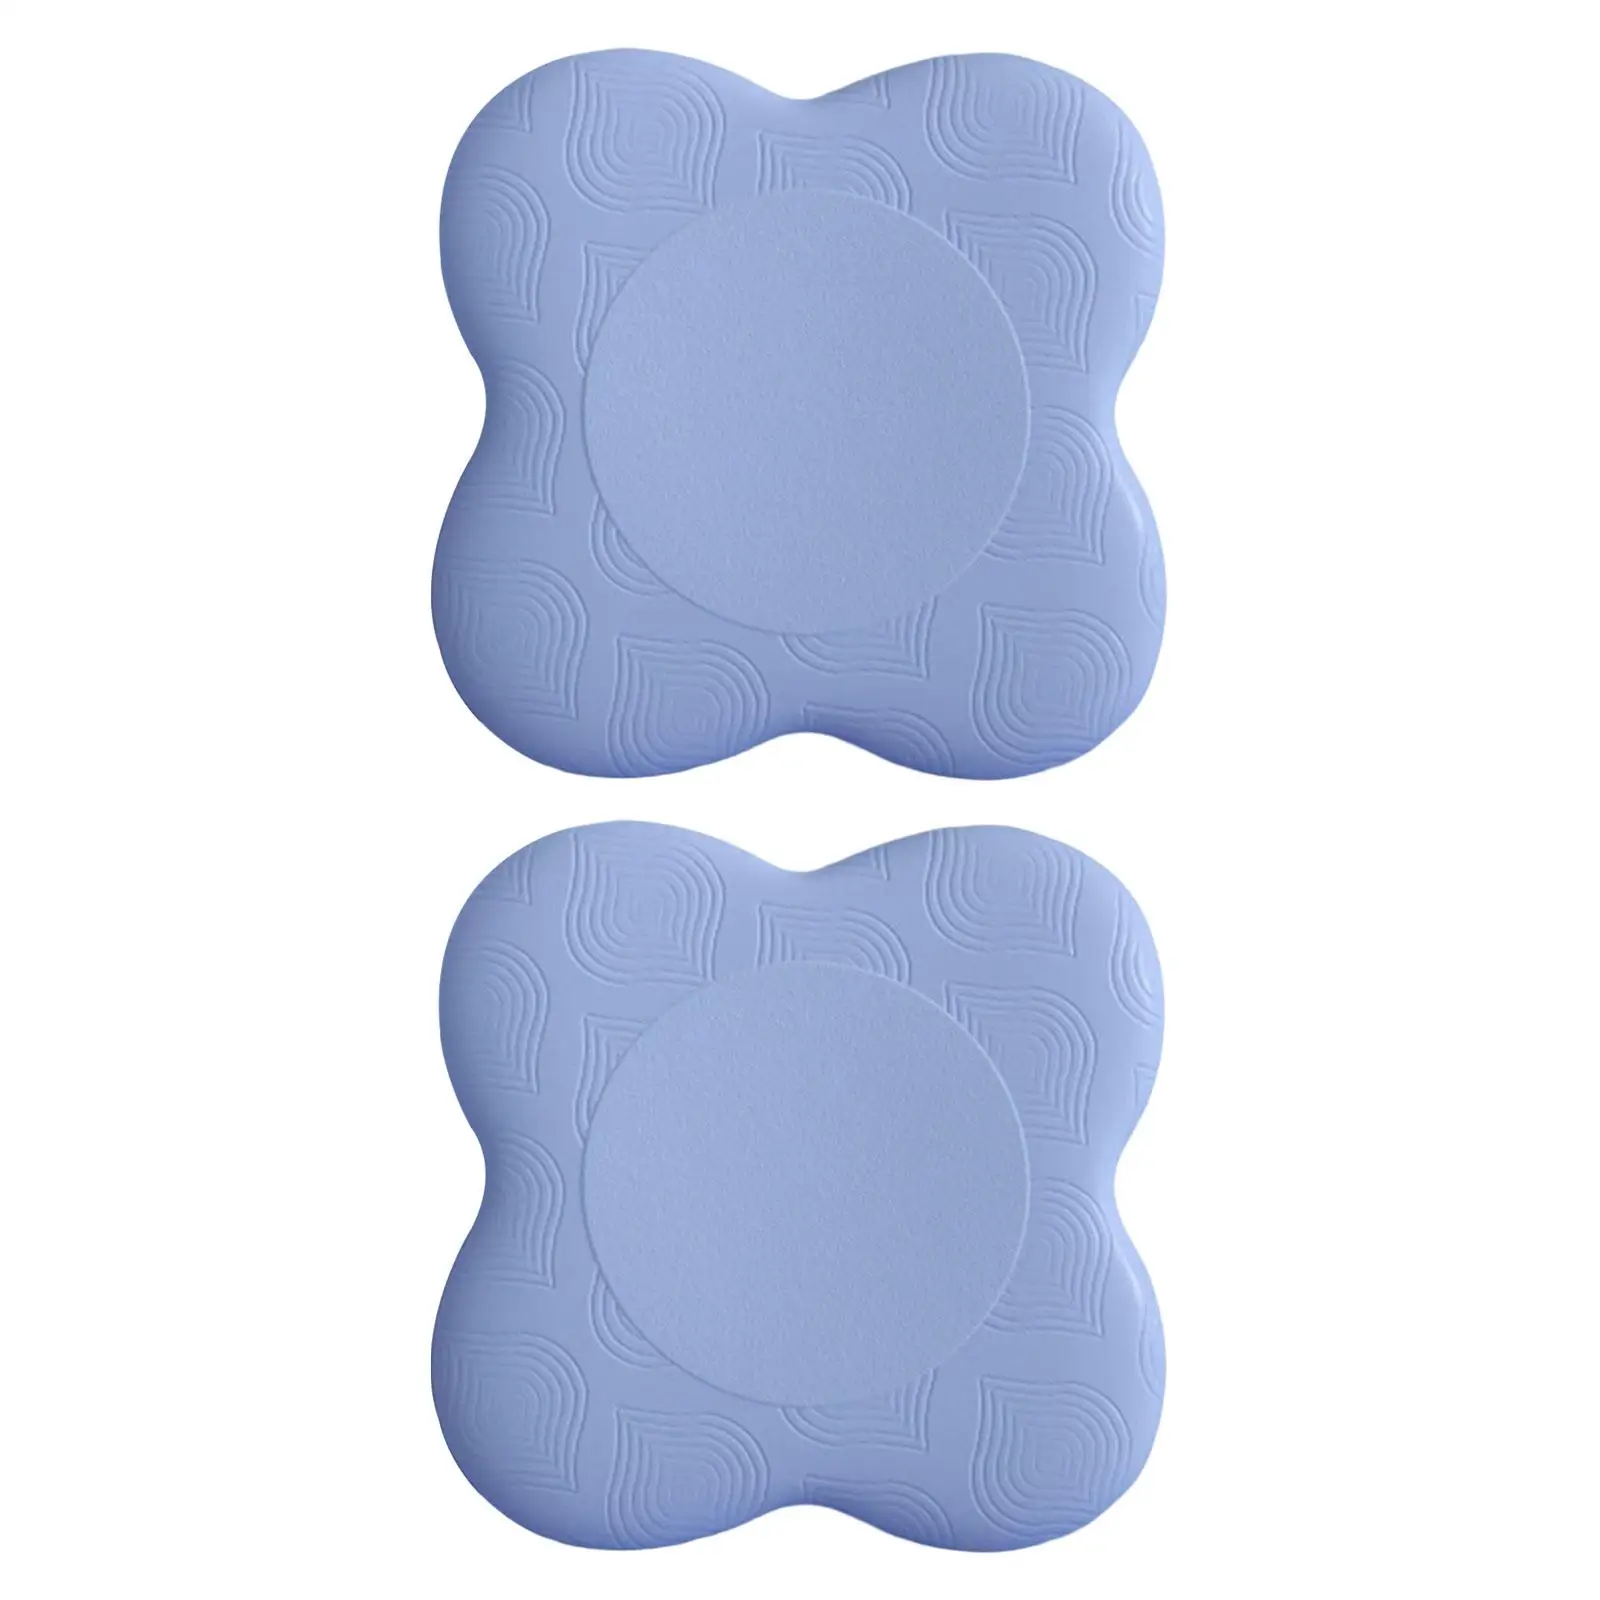 2x Yoga Knee Pad Cushion Comfortable Soft Anti Slip Pilates Kneeling Pad Balance Cushion for Elbow Hands Ankle Meditation